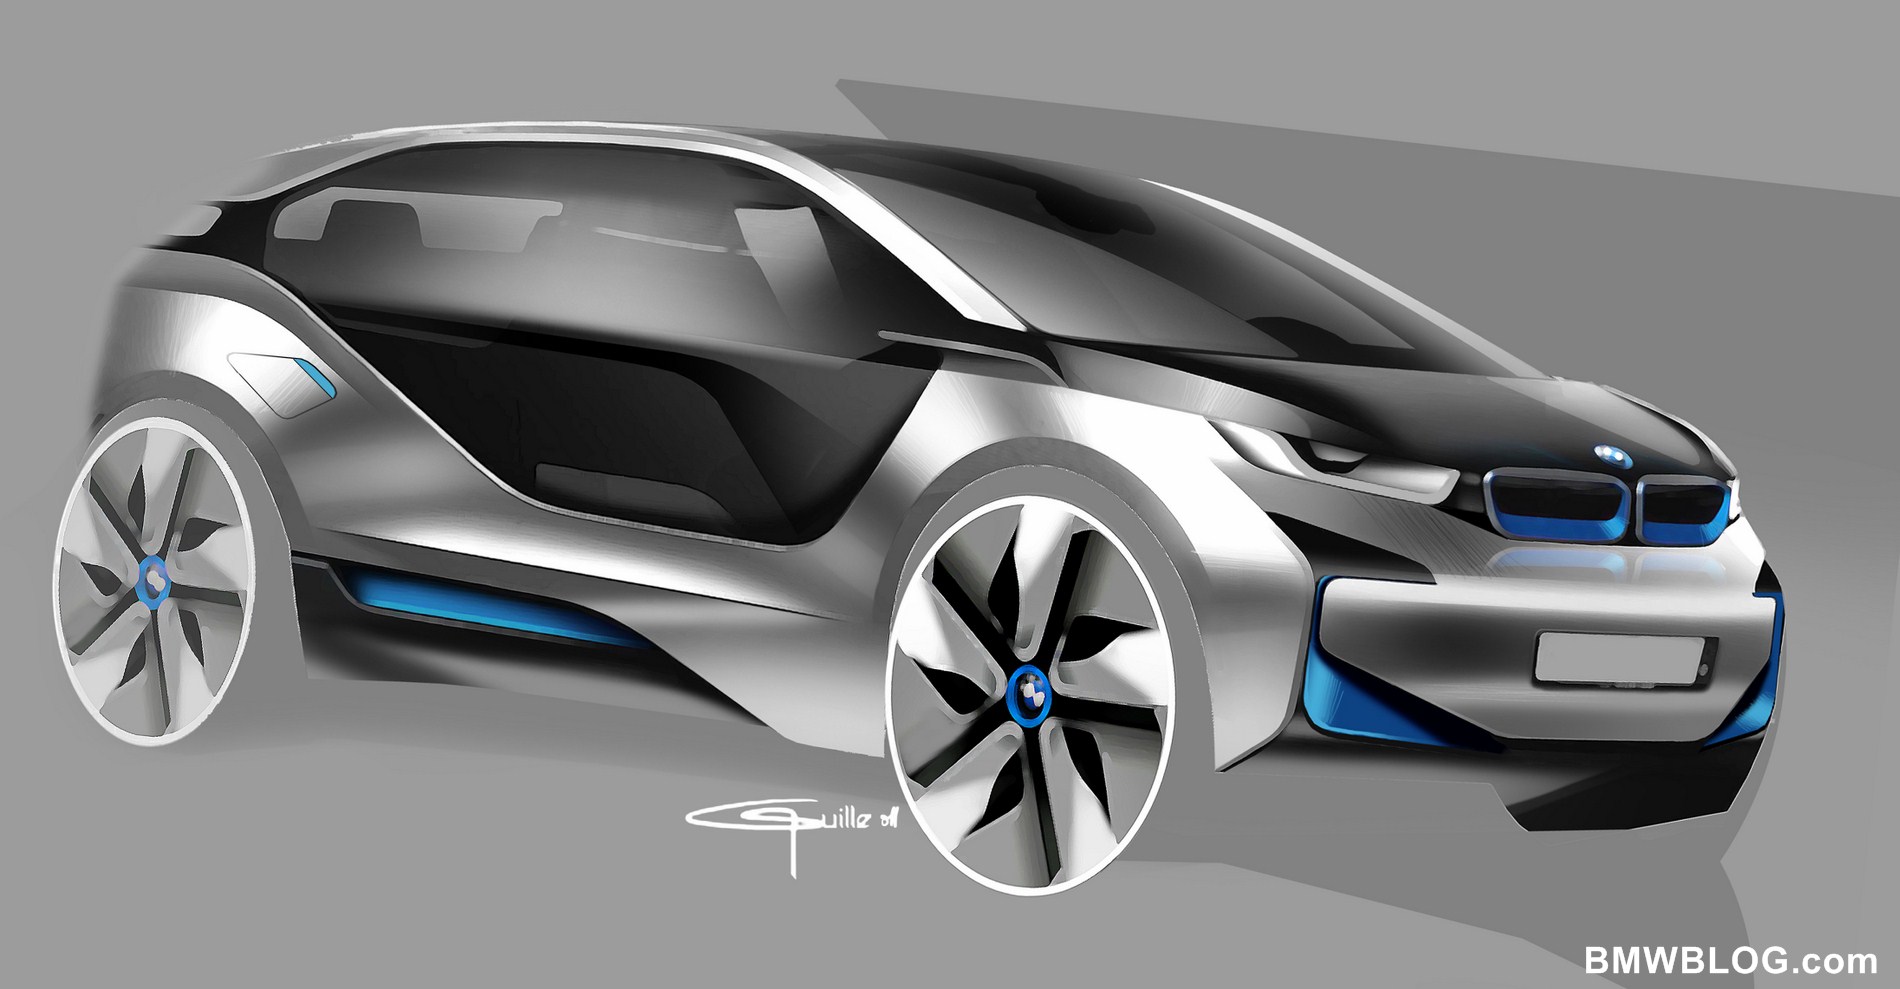 BMW I3 Concept Backgrounds, Compatible - PC, Mobile, Gadgets| 1900x989 px